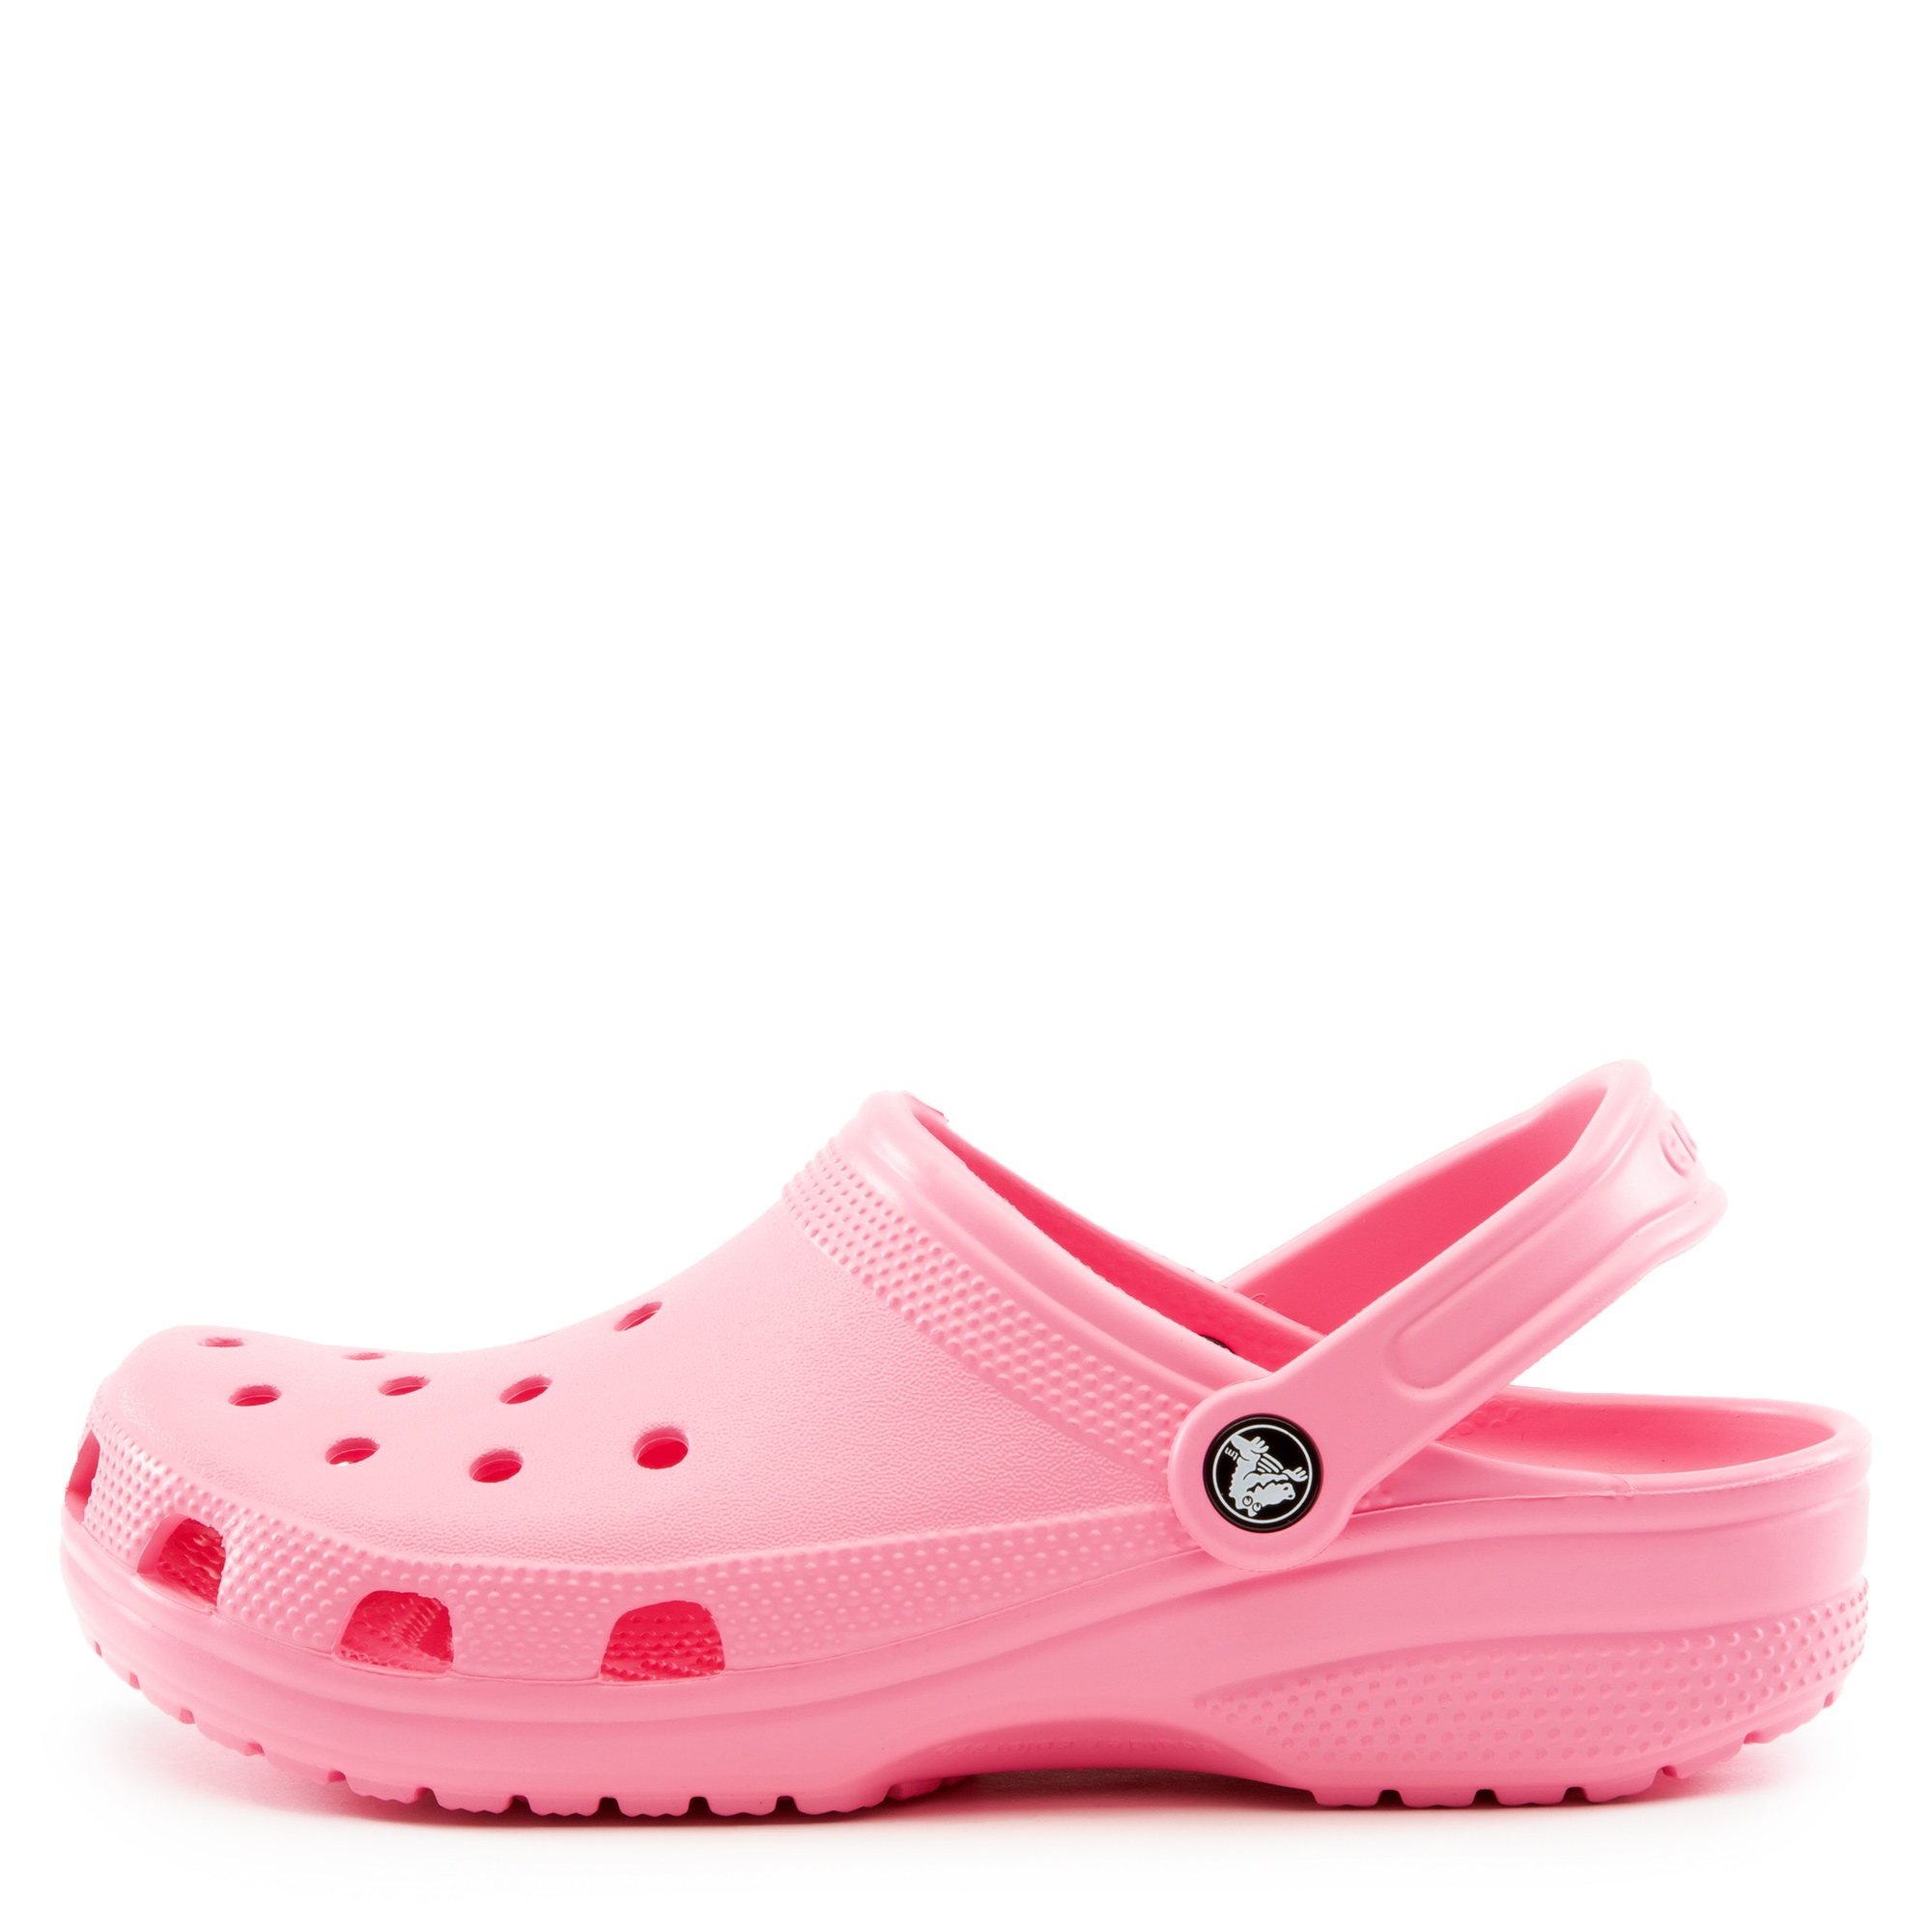 Crocs Classic Lined Clog in Pink Lemonade New Season